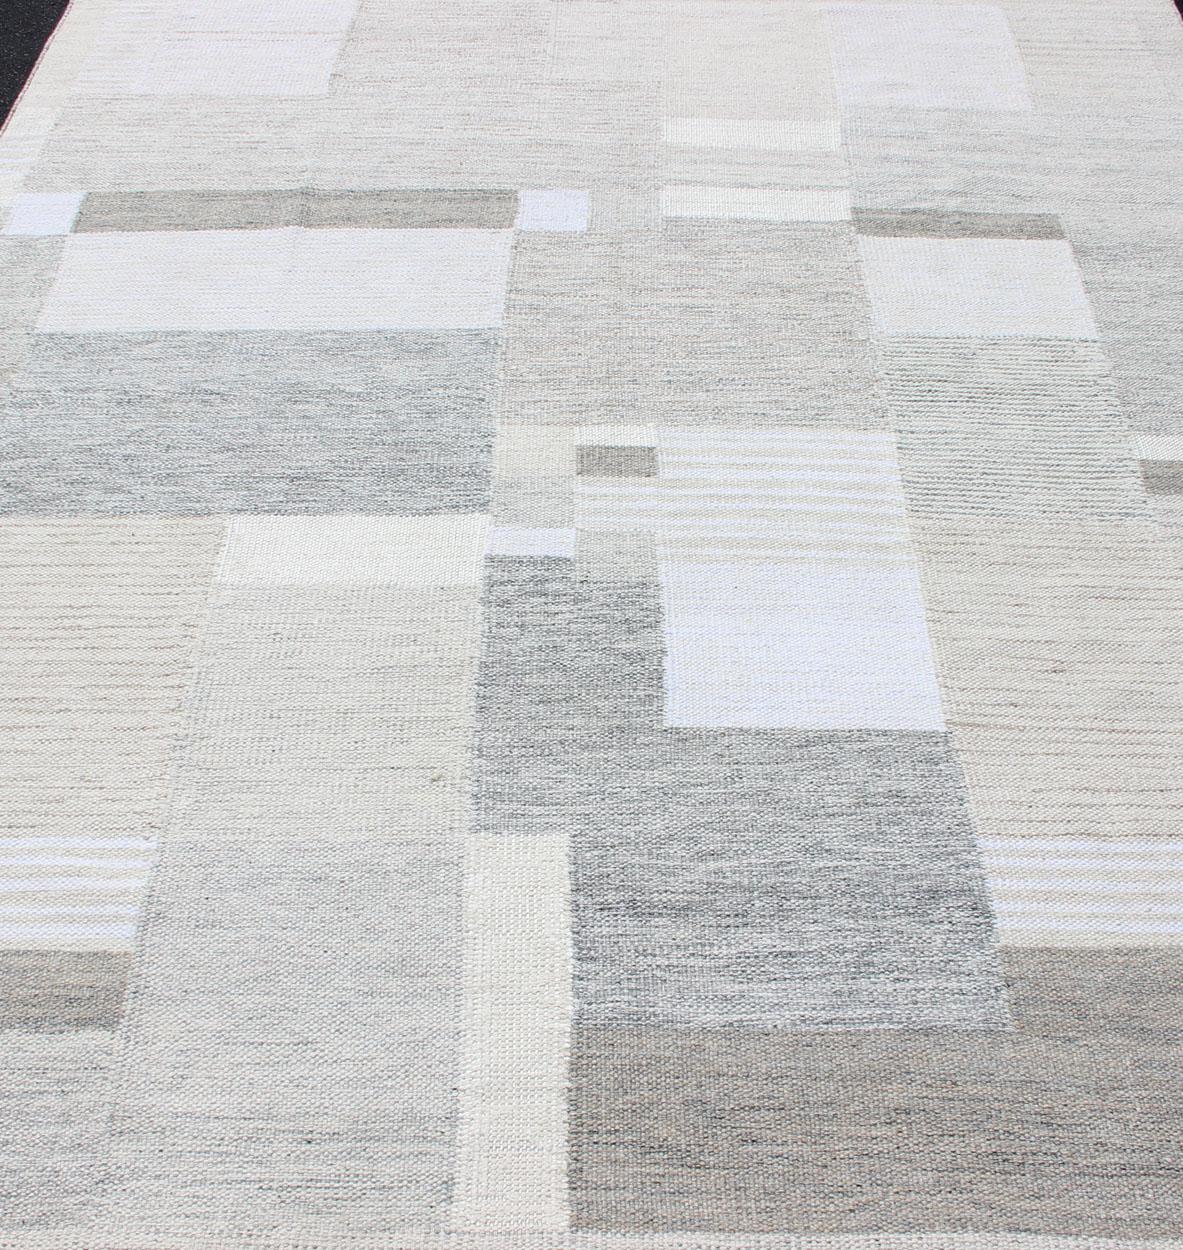 Wool Modern Scandinavian Flat-Weave Rug Design in Gray, beige, Creams & White Tones For Sale